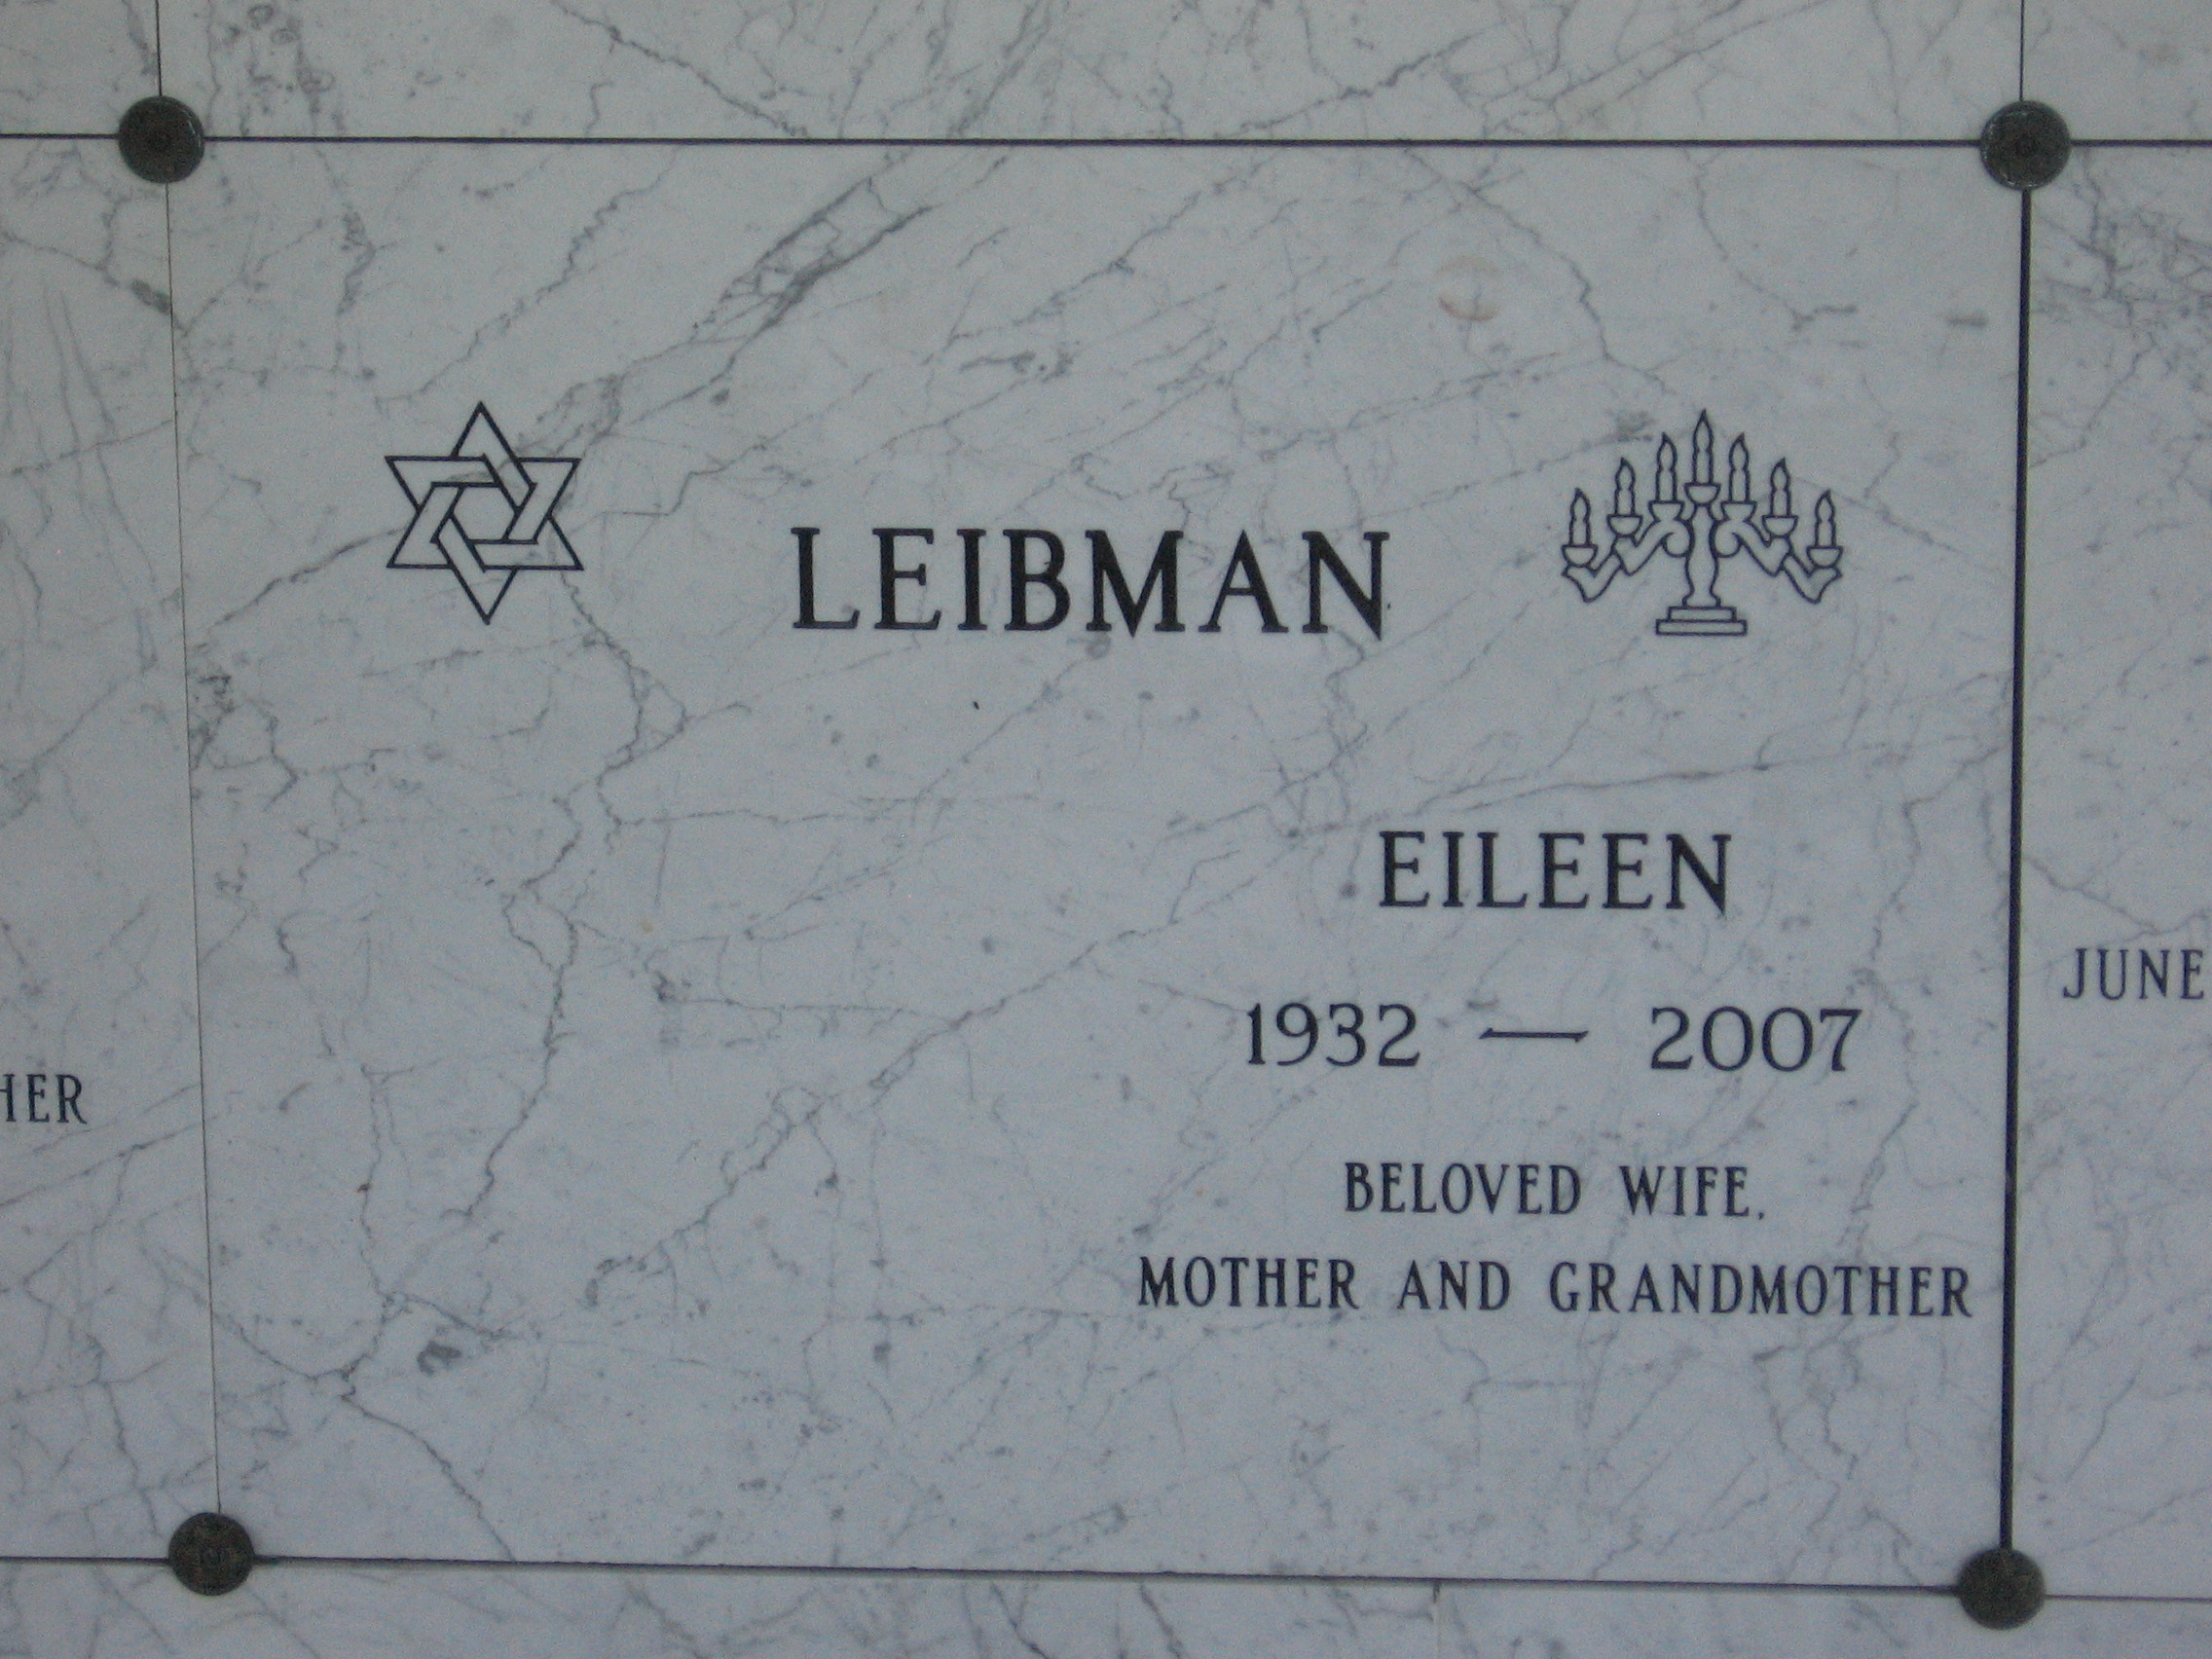 Eileen Leibman